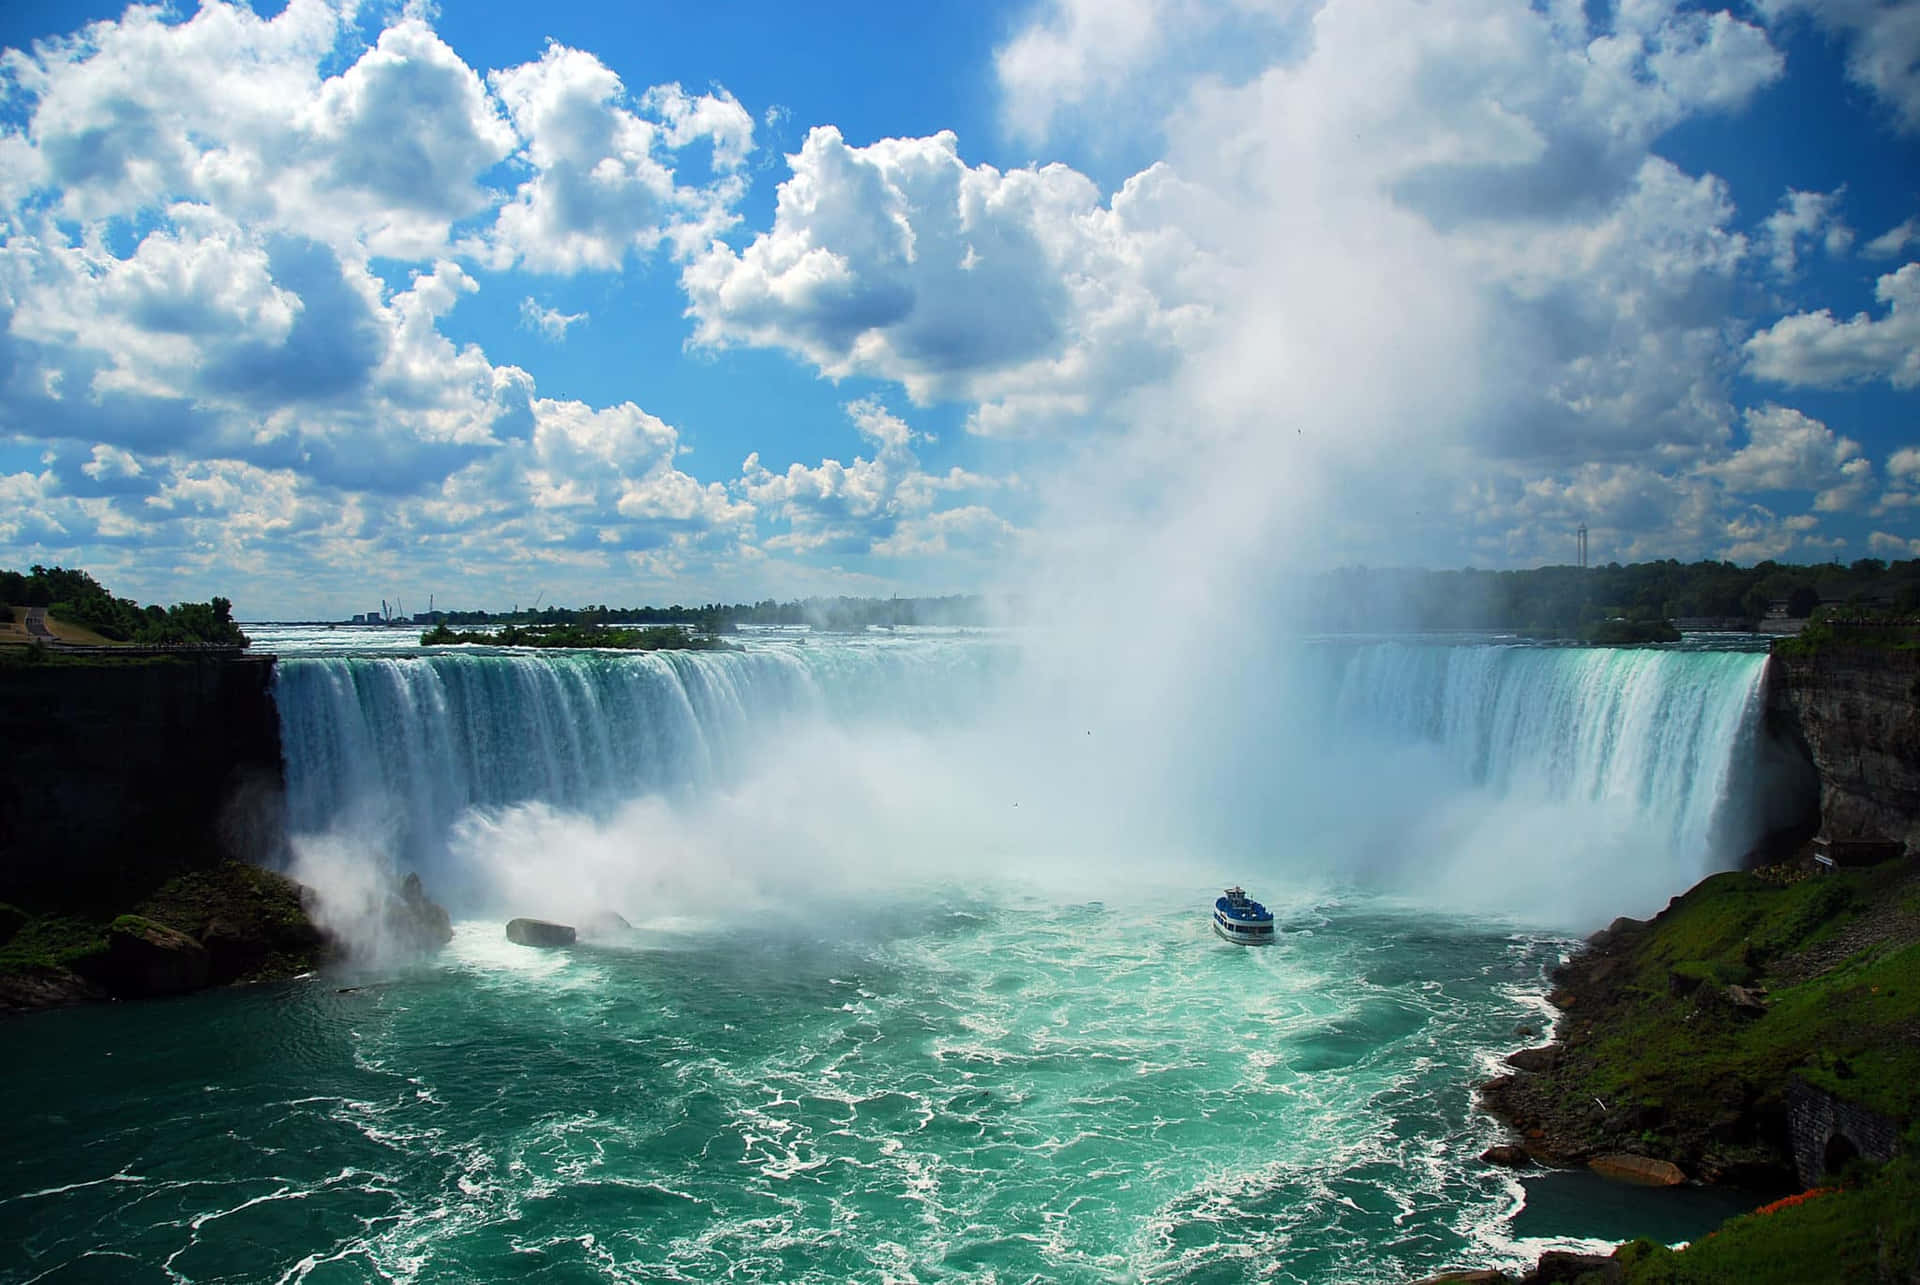 "The majesty of Niagara Falls"